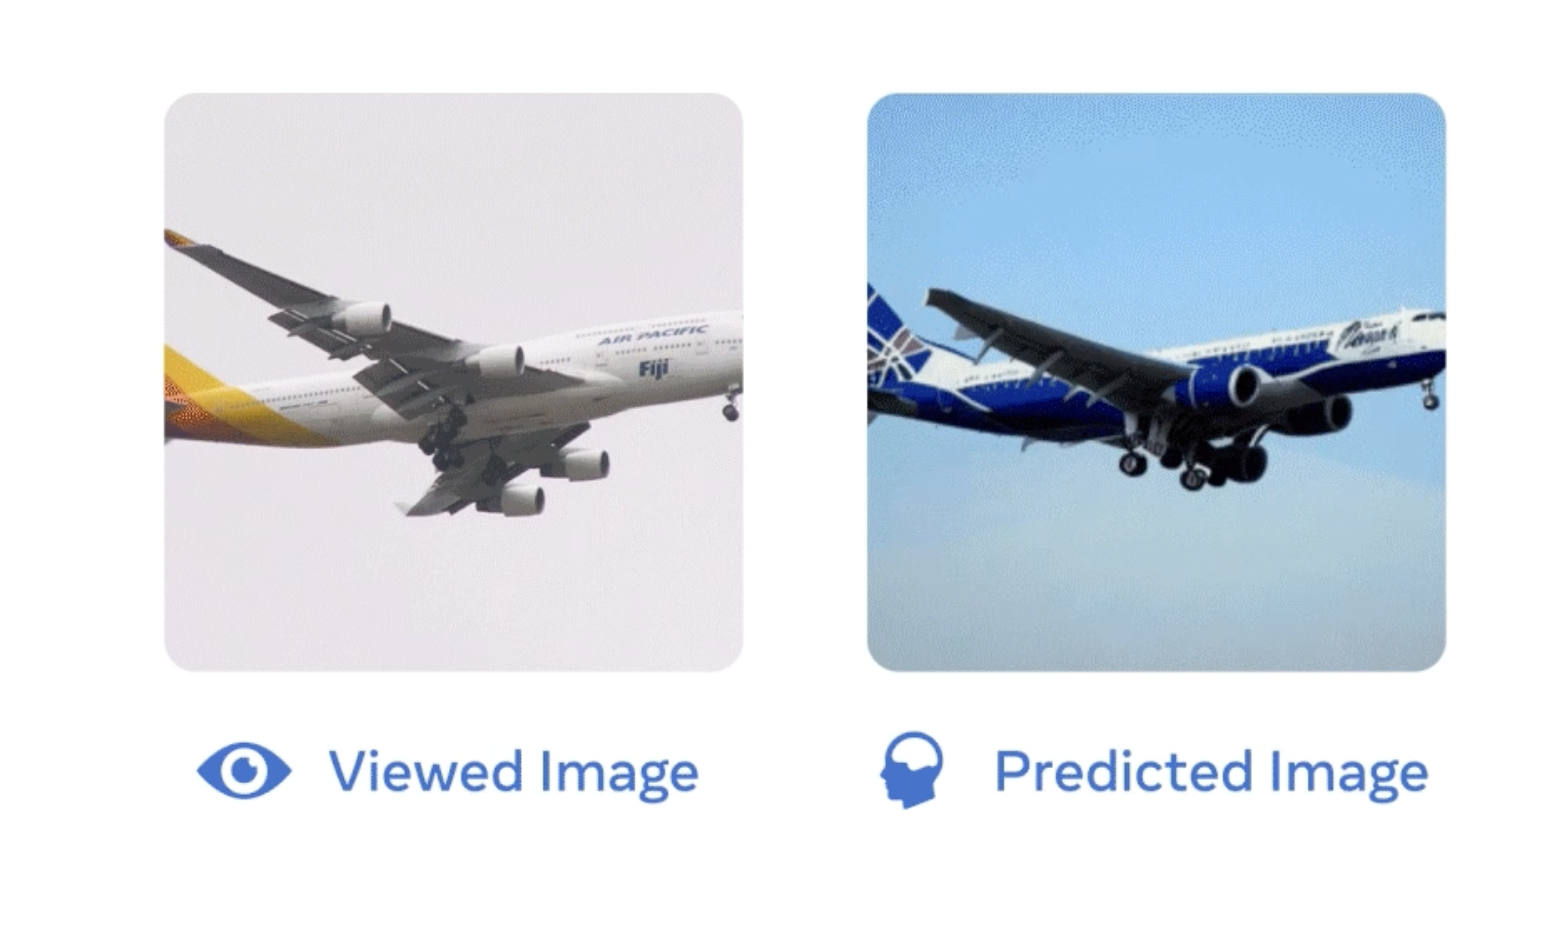 Viewed vs predicted image